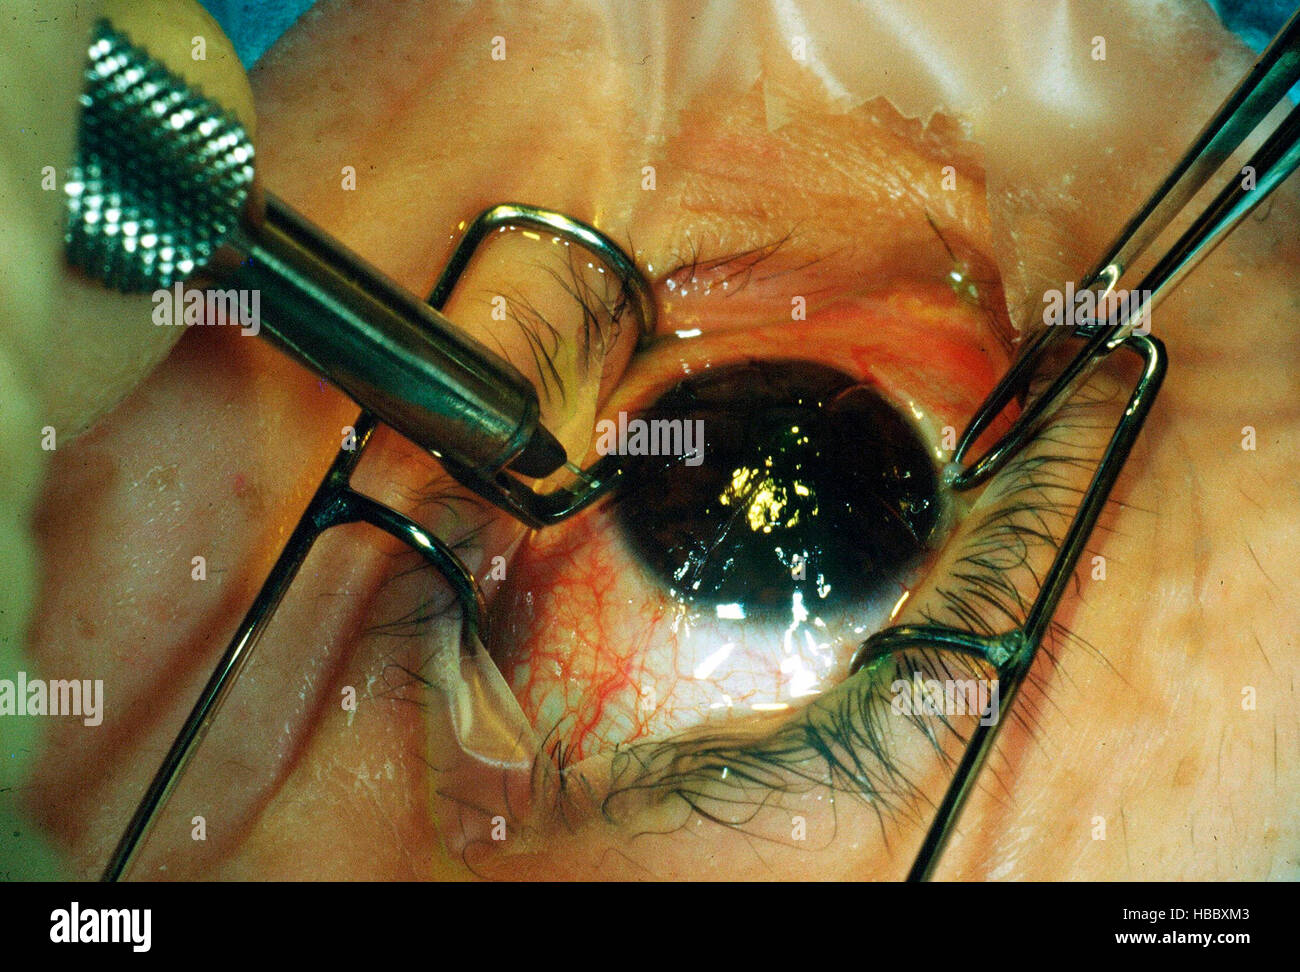 Eye surgery, Radial Keratotomy eye operation to correct short sight, 1985 Stock Photo